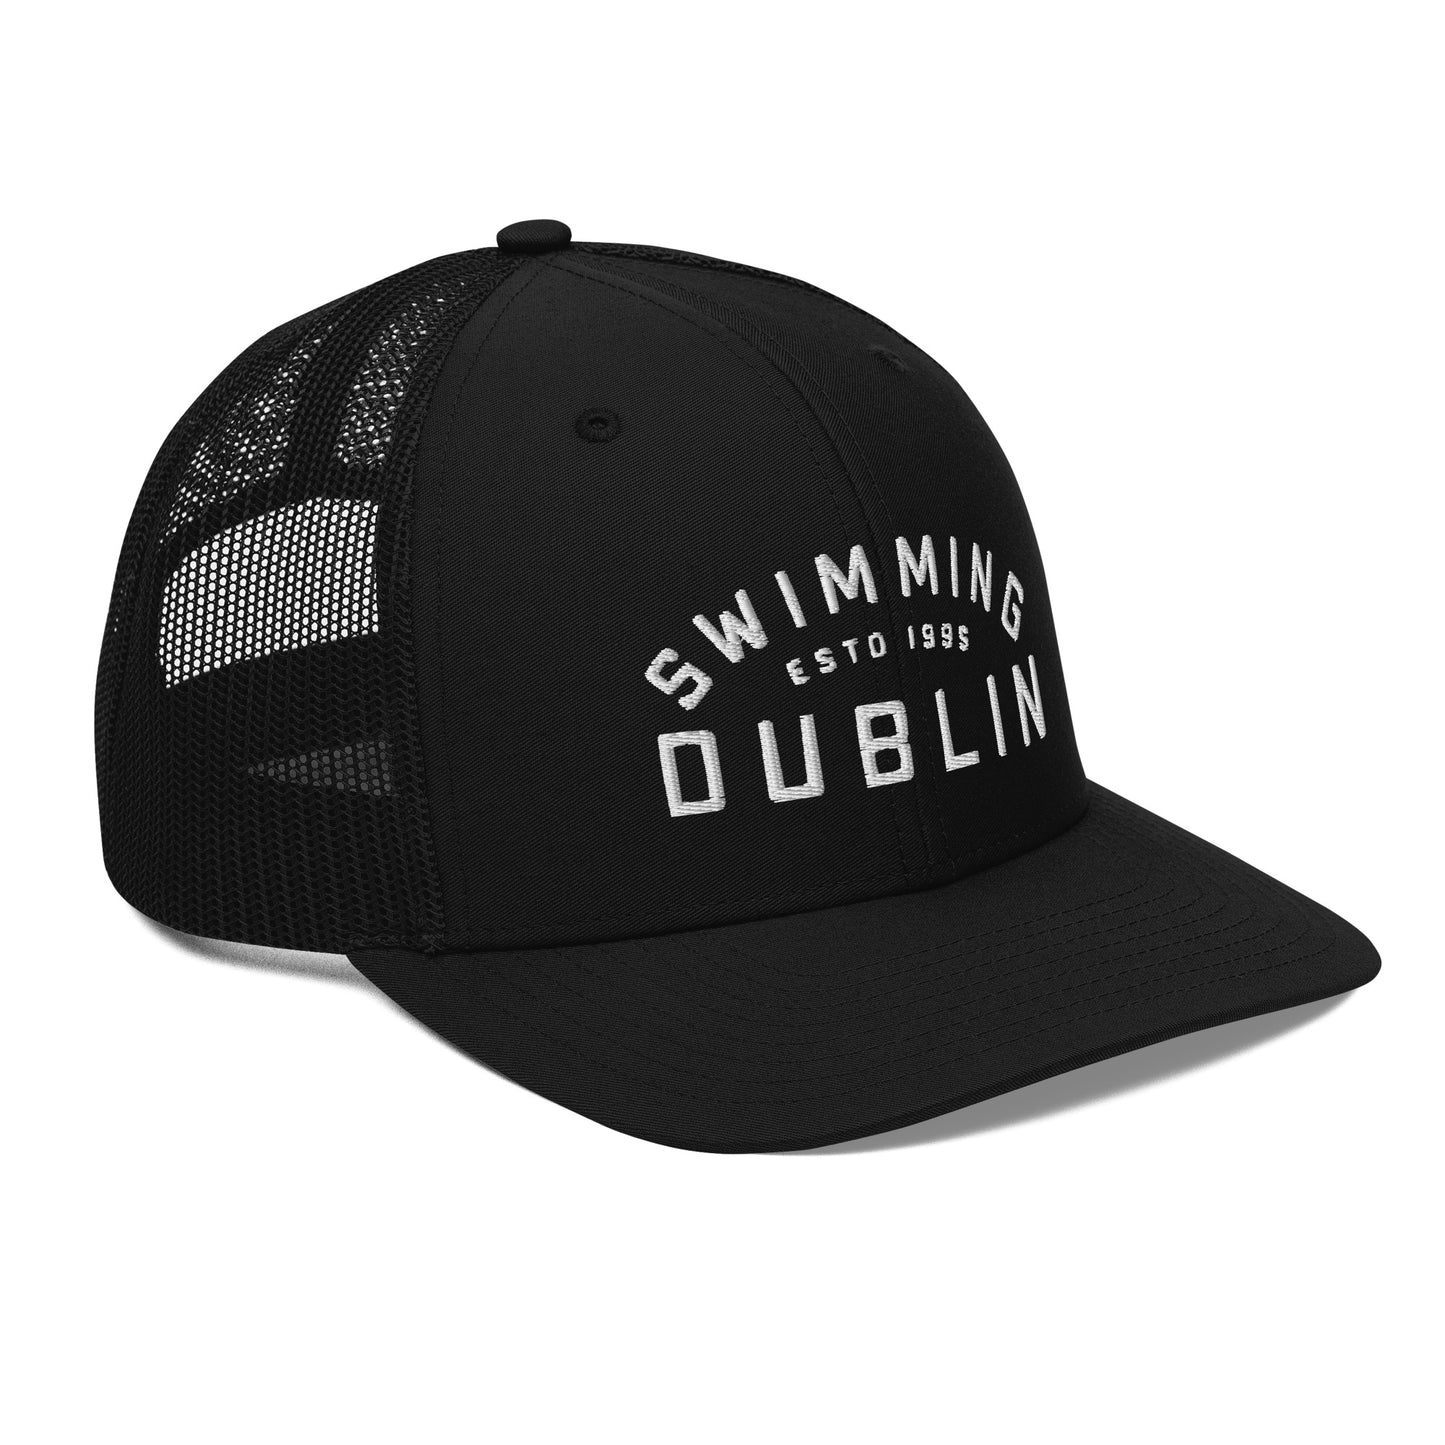 SWIMMING DUBLIN-Trucker Cap